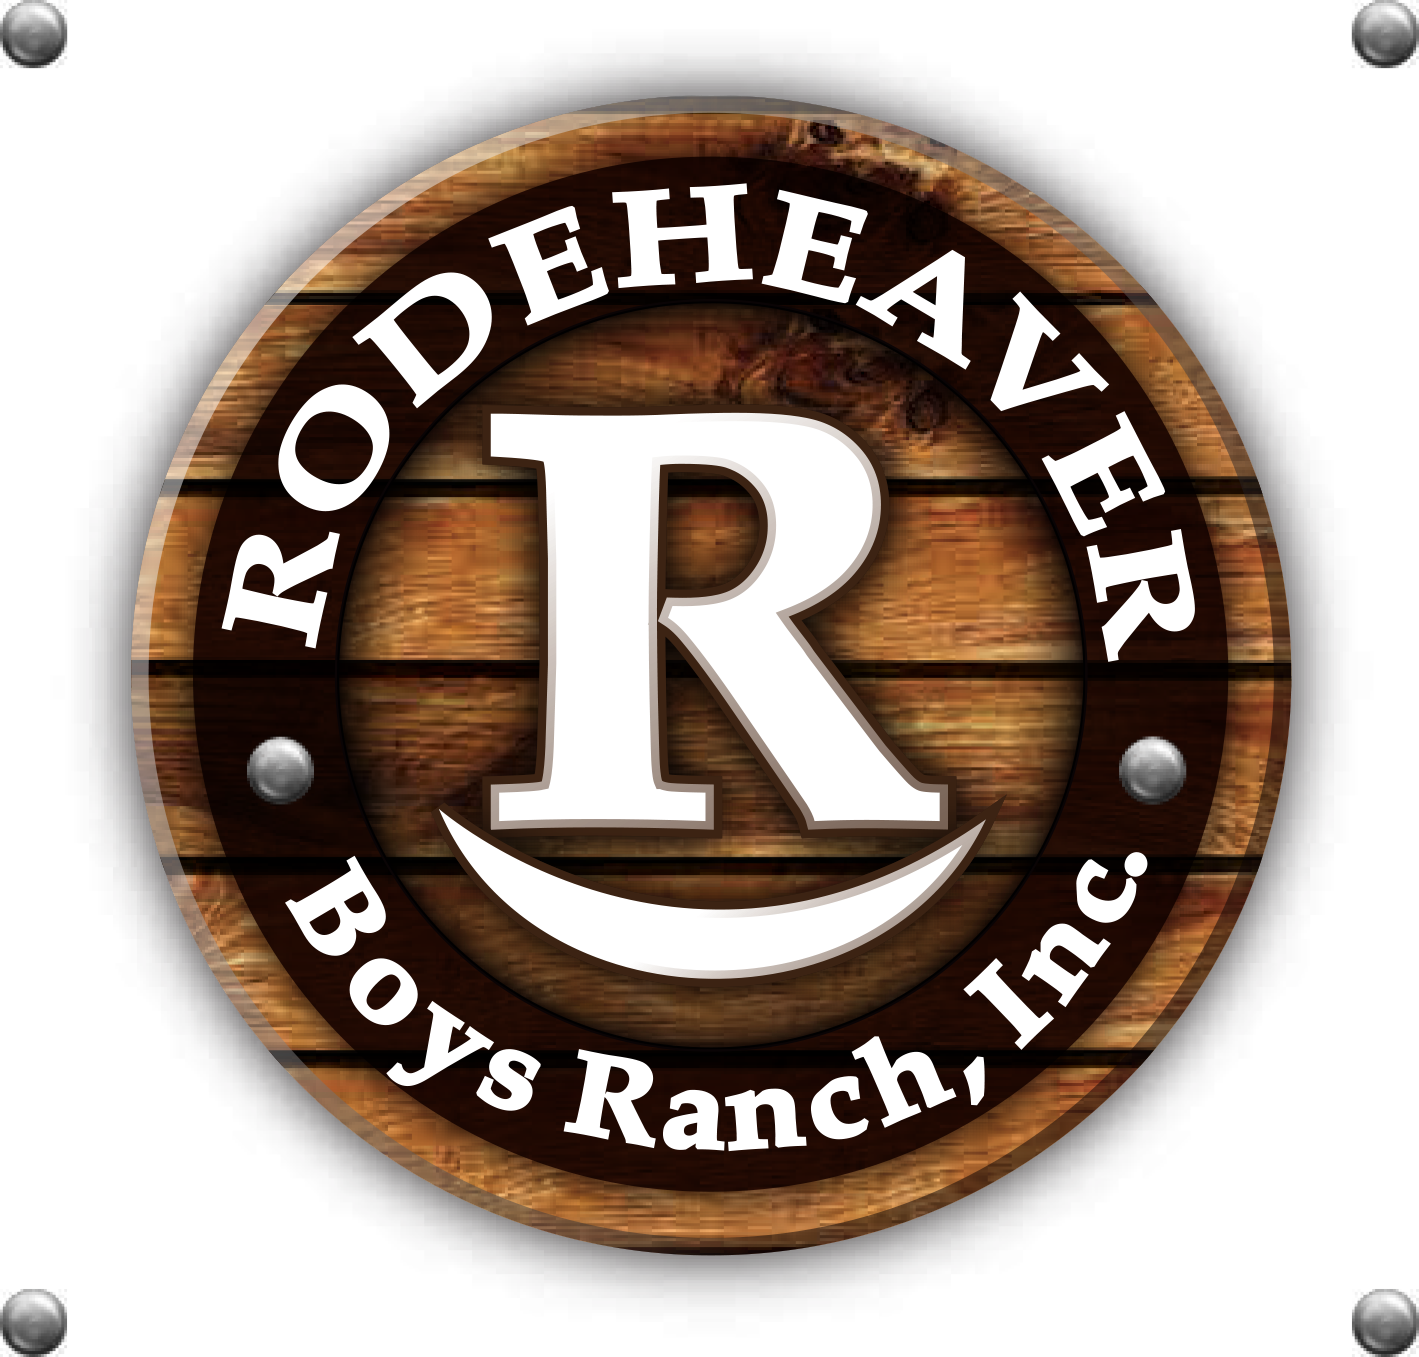 Rodeheaver Boys Ranch